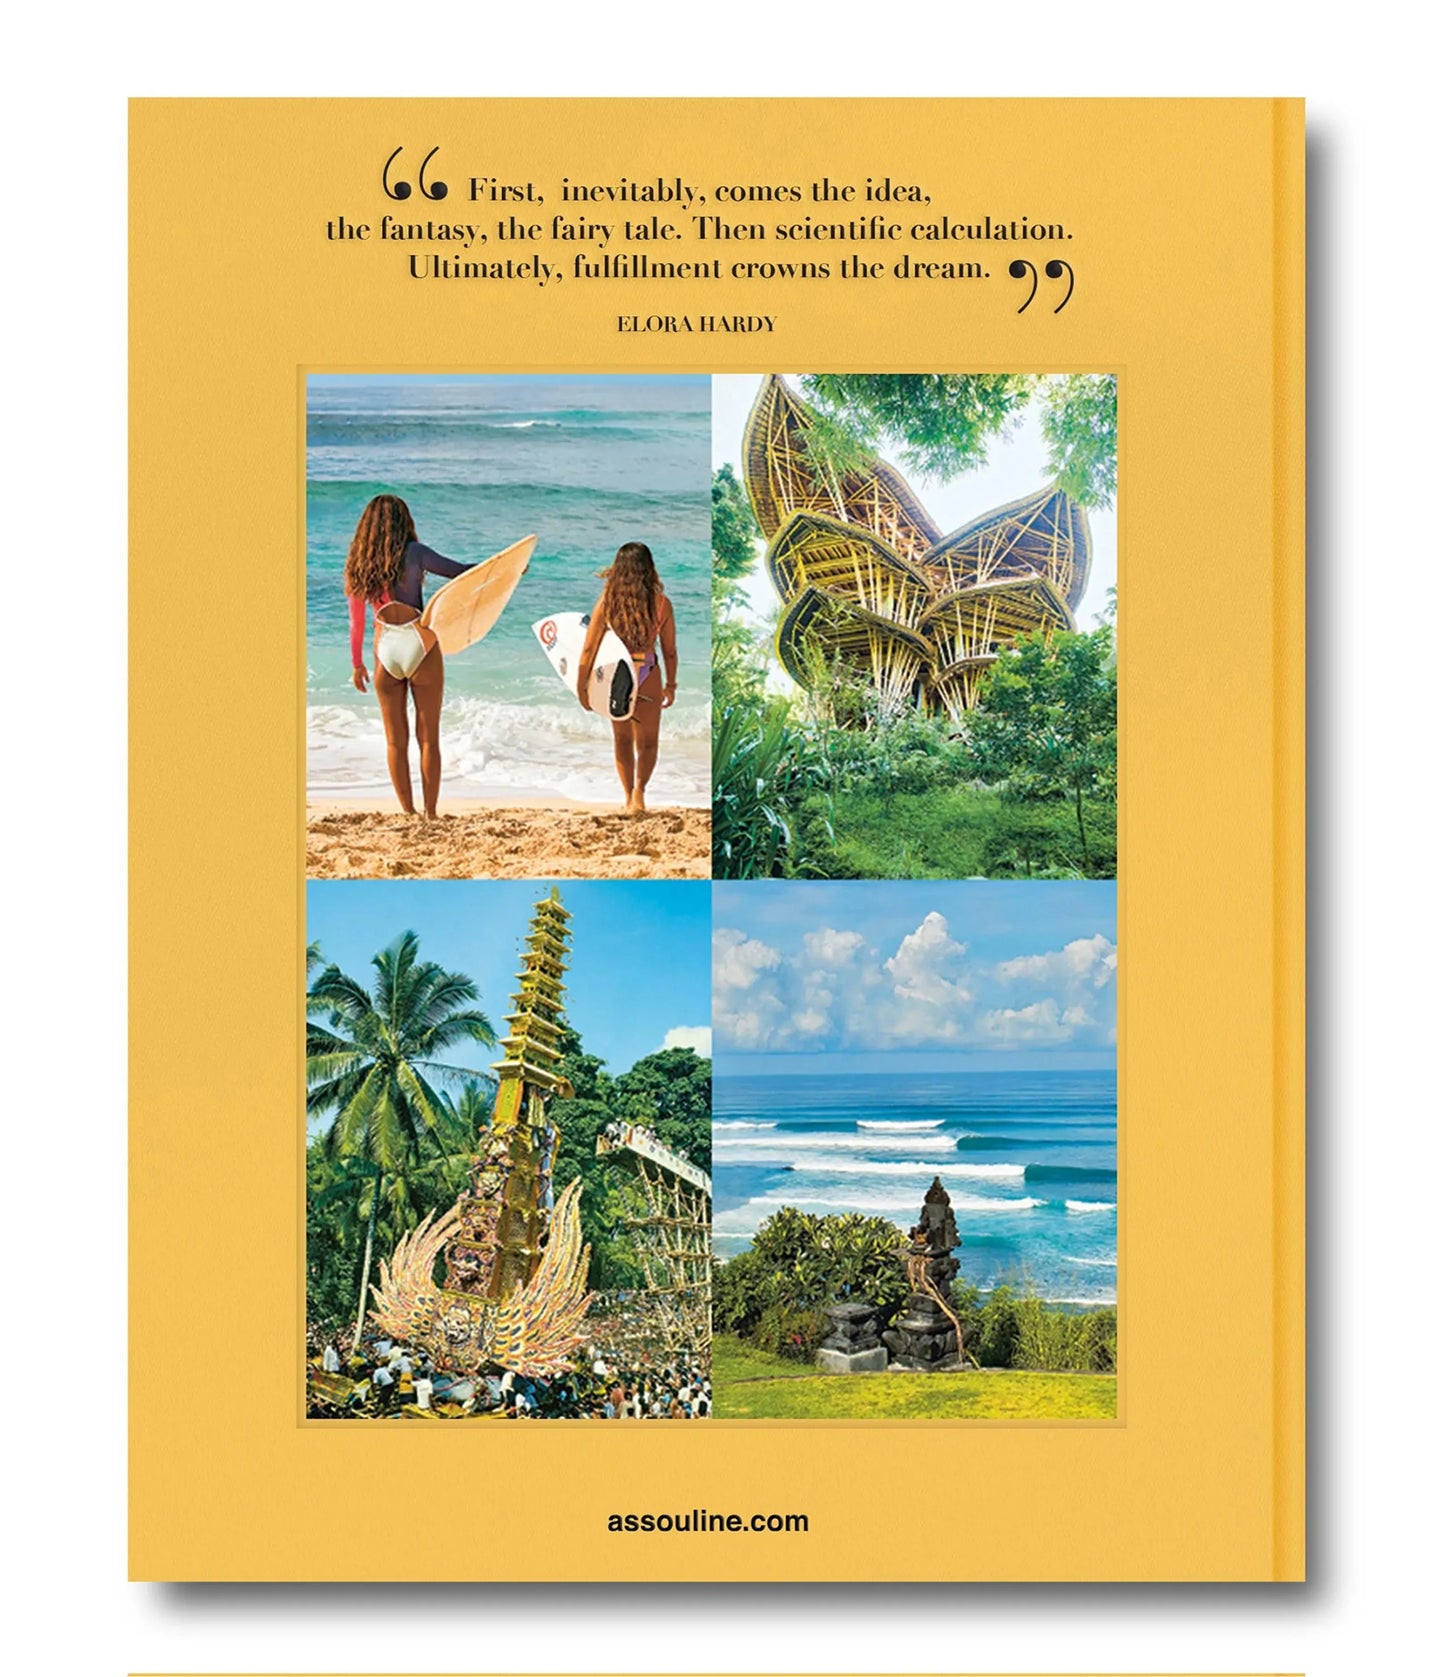 Livre Bali mystique